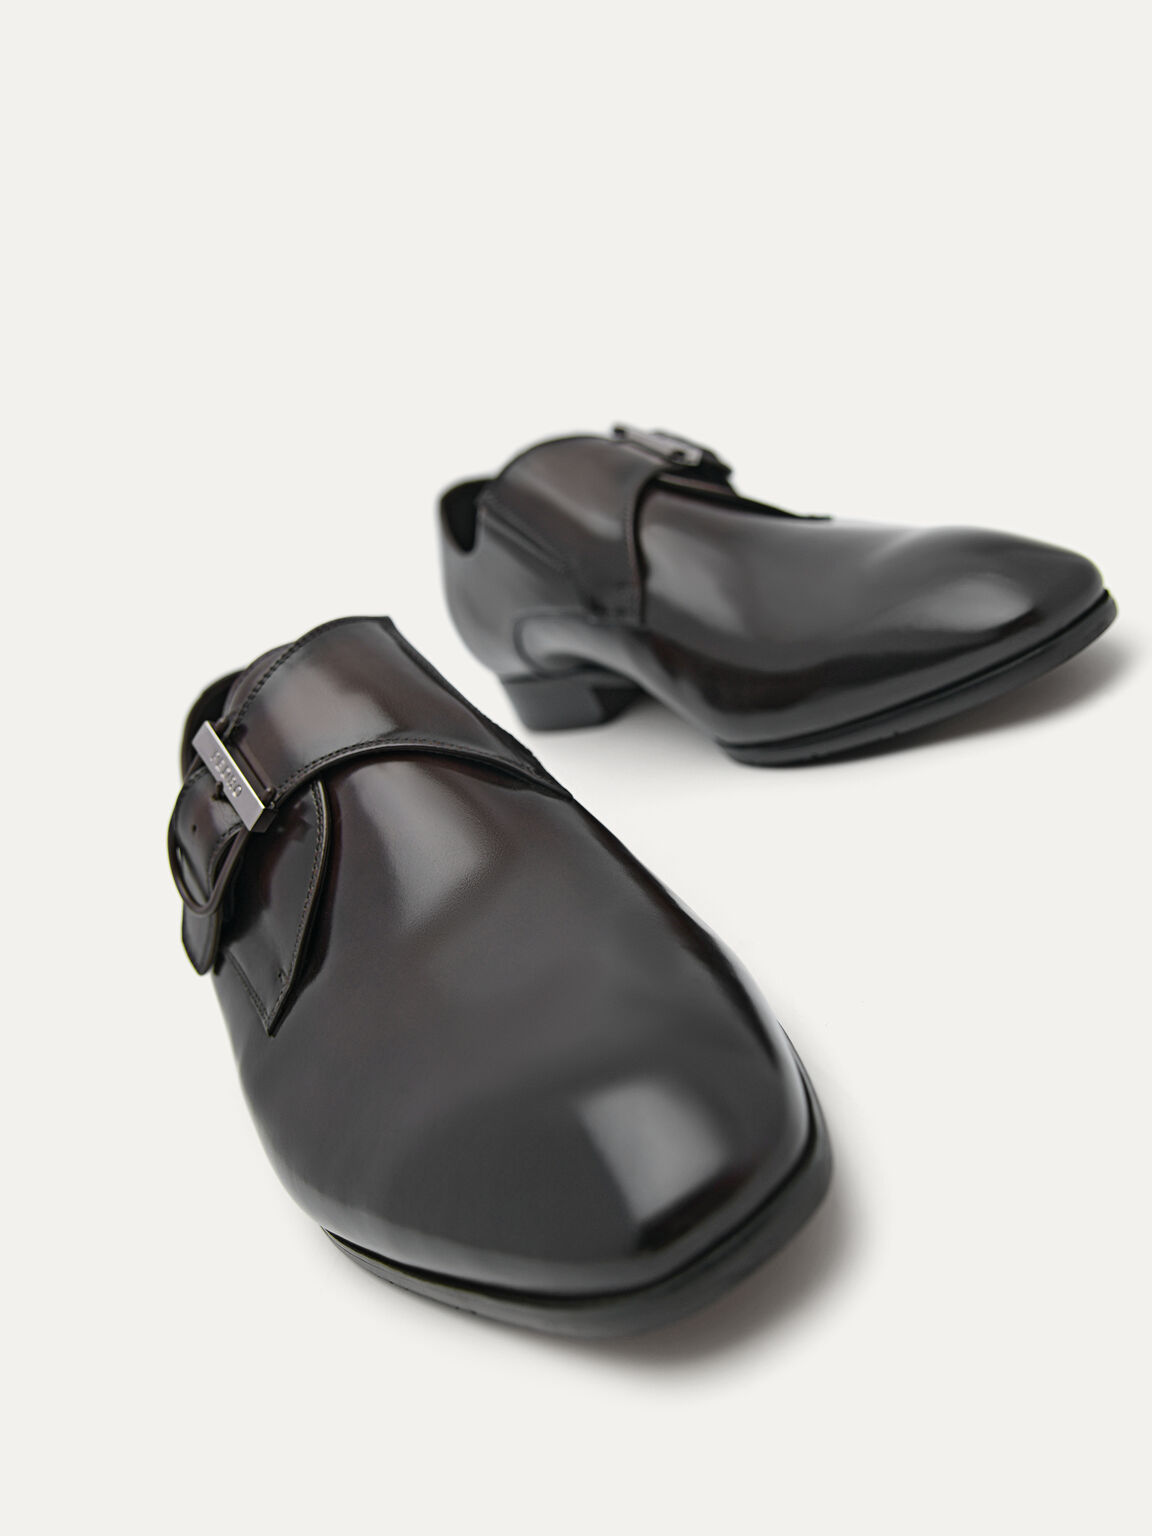 Redford Leather Single Monkstrap Shoes, Dark Brown